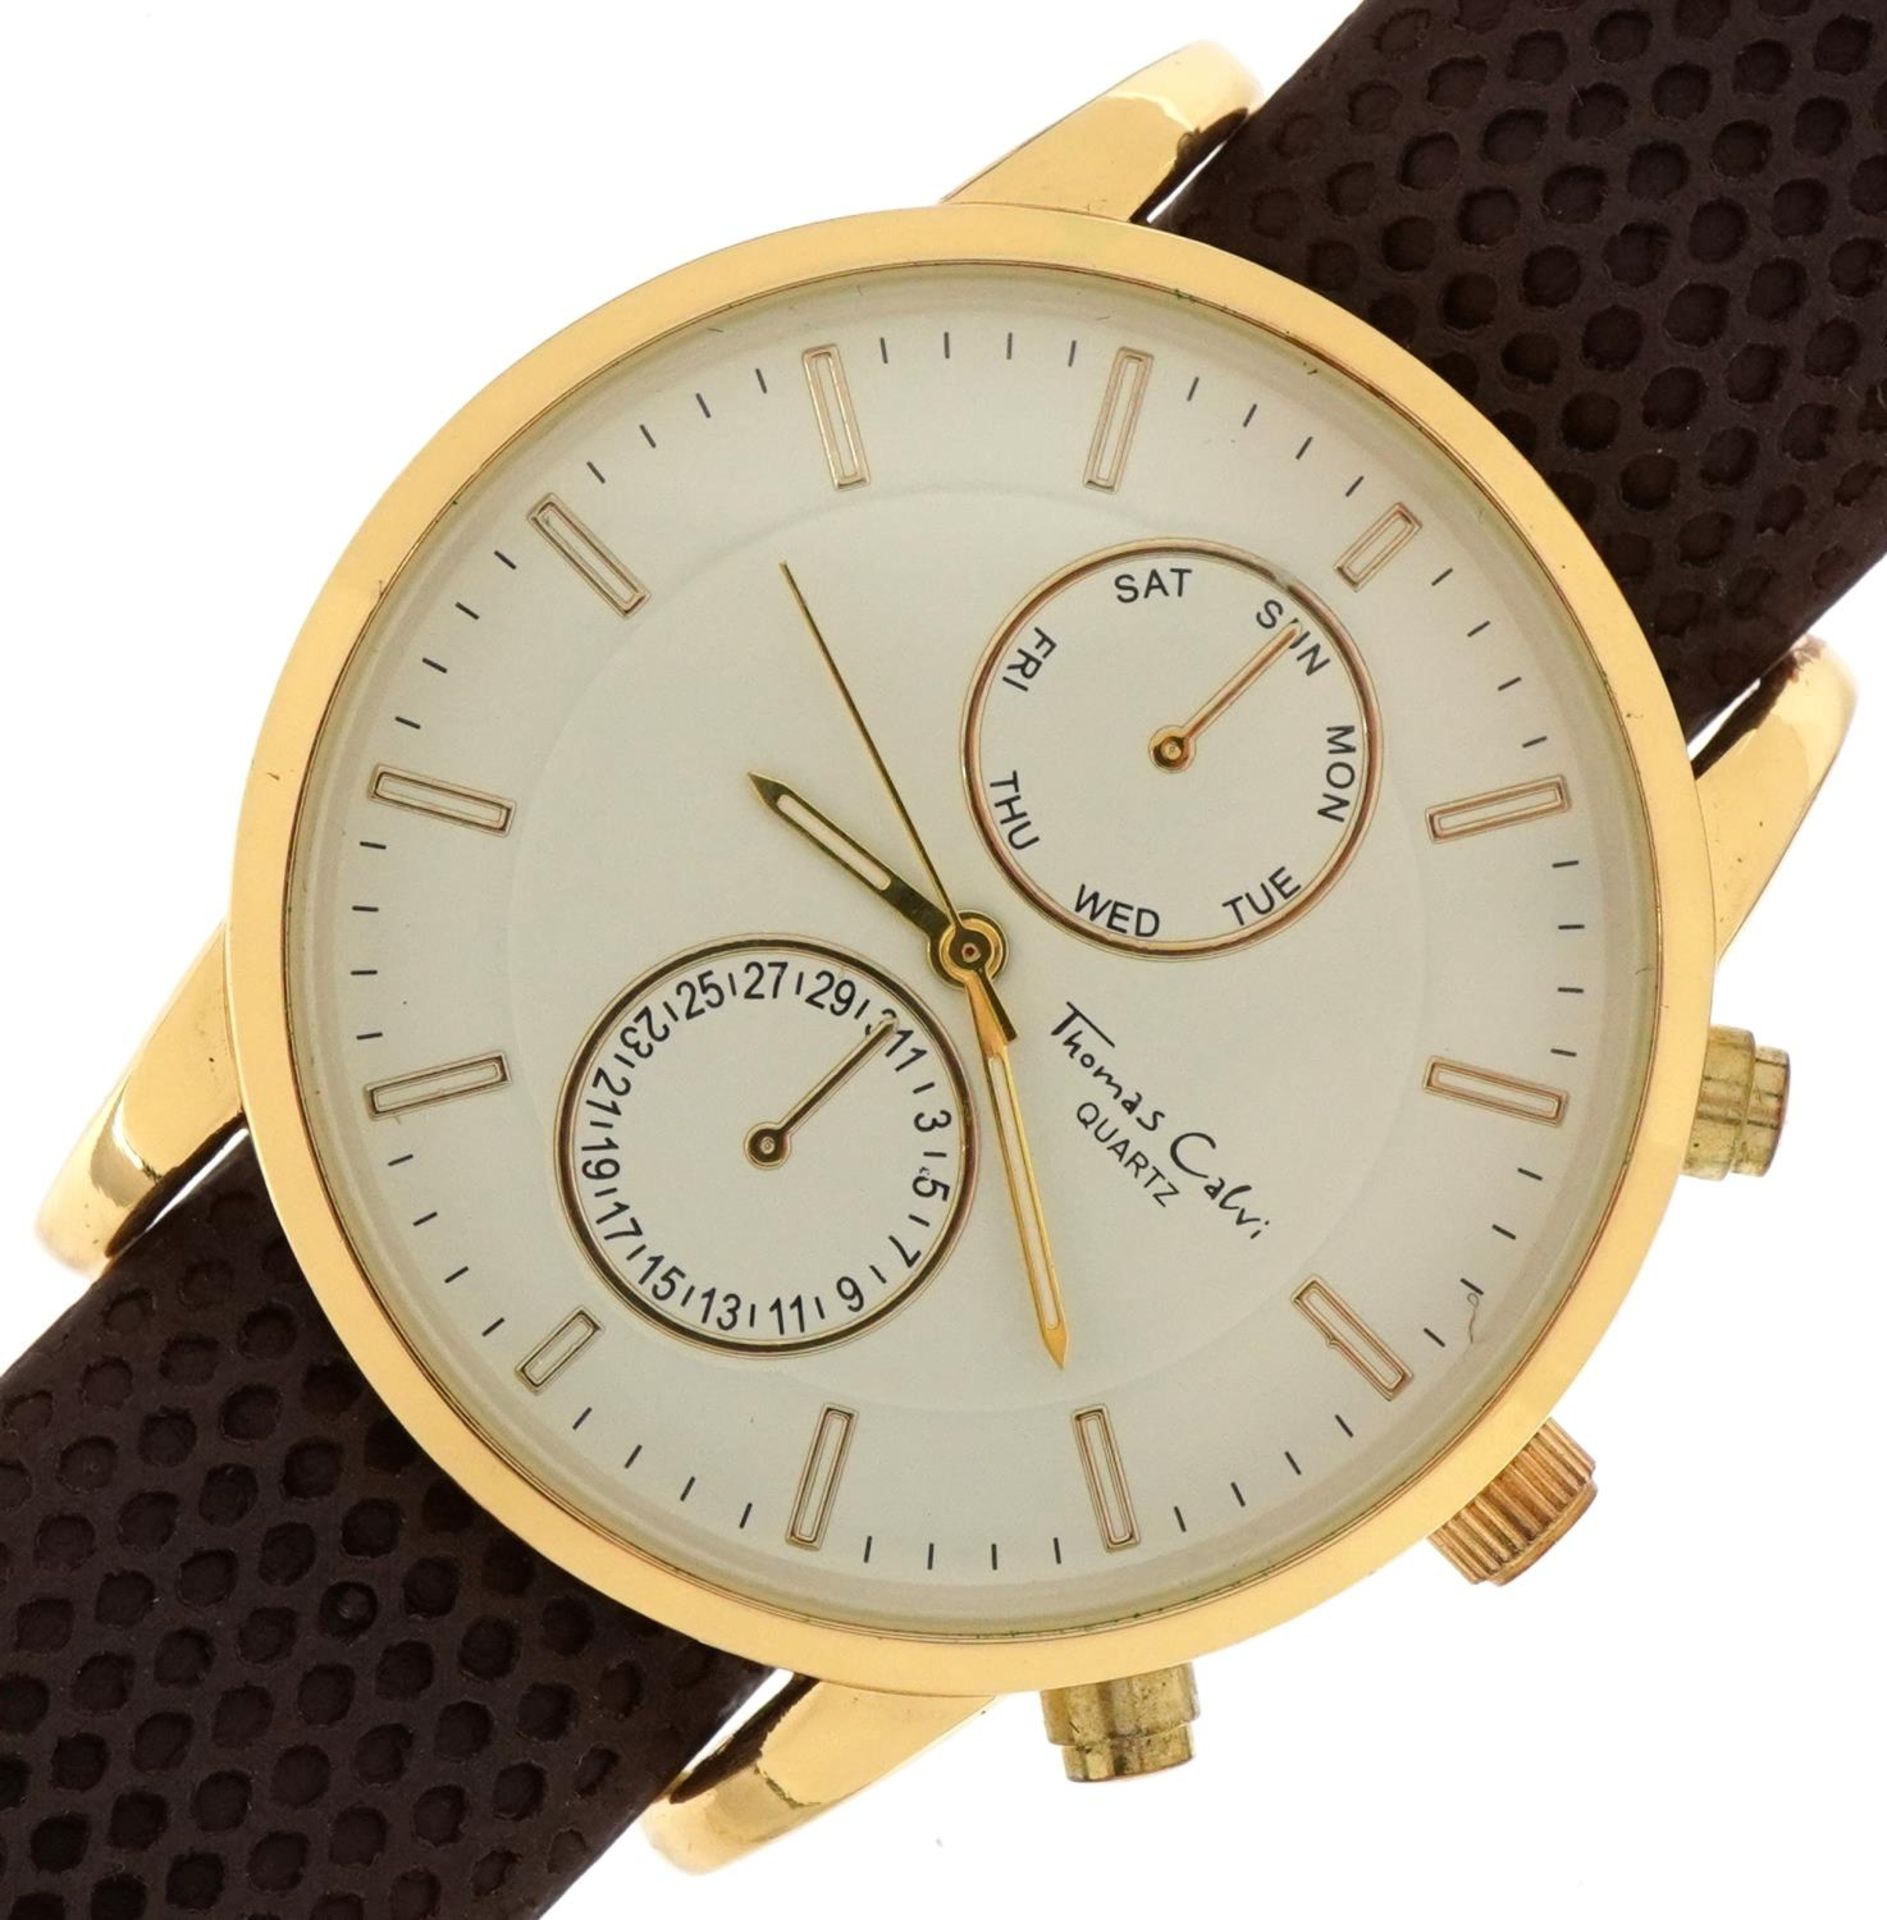 Thomas Calvi, gentlemen's wristwatch with spare straps and box, 42mm in diameter